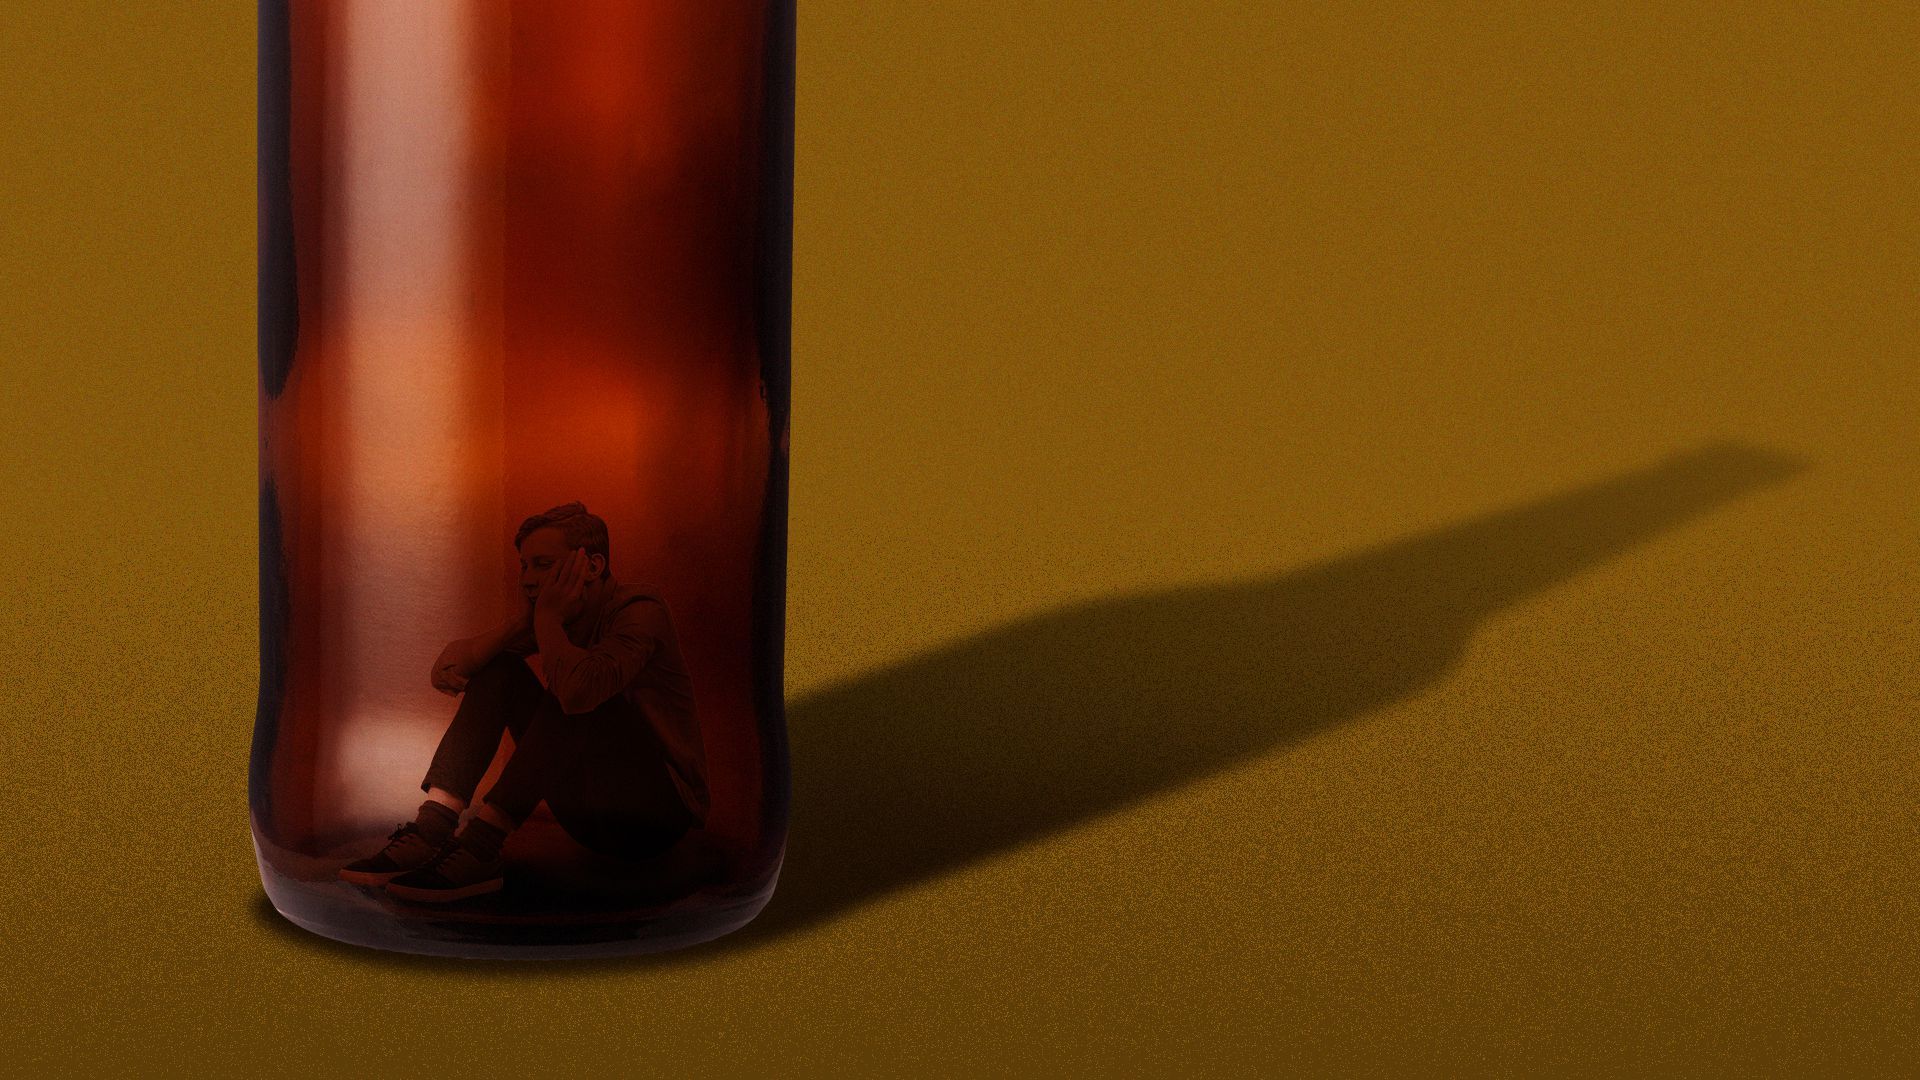 Illustration of a sad man sitting inside of an empty beer bottle.